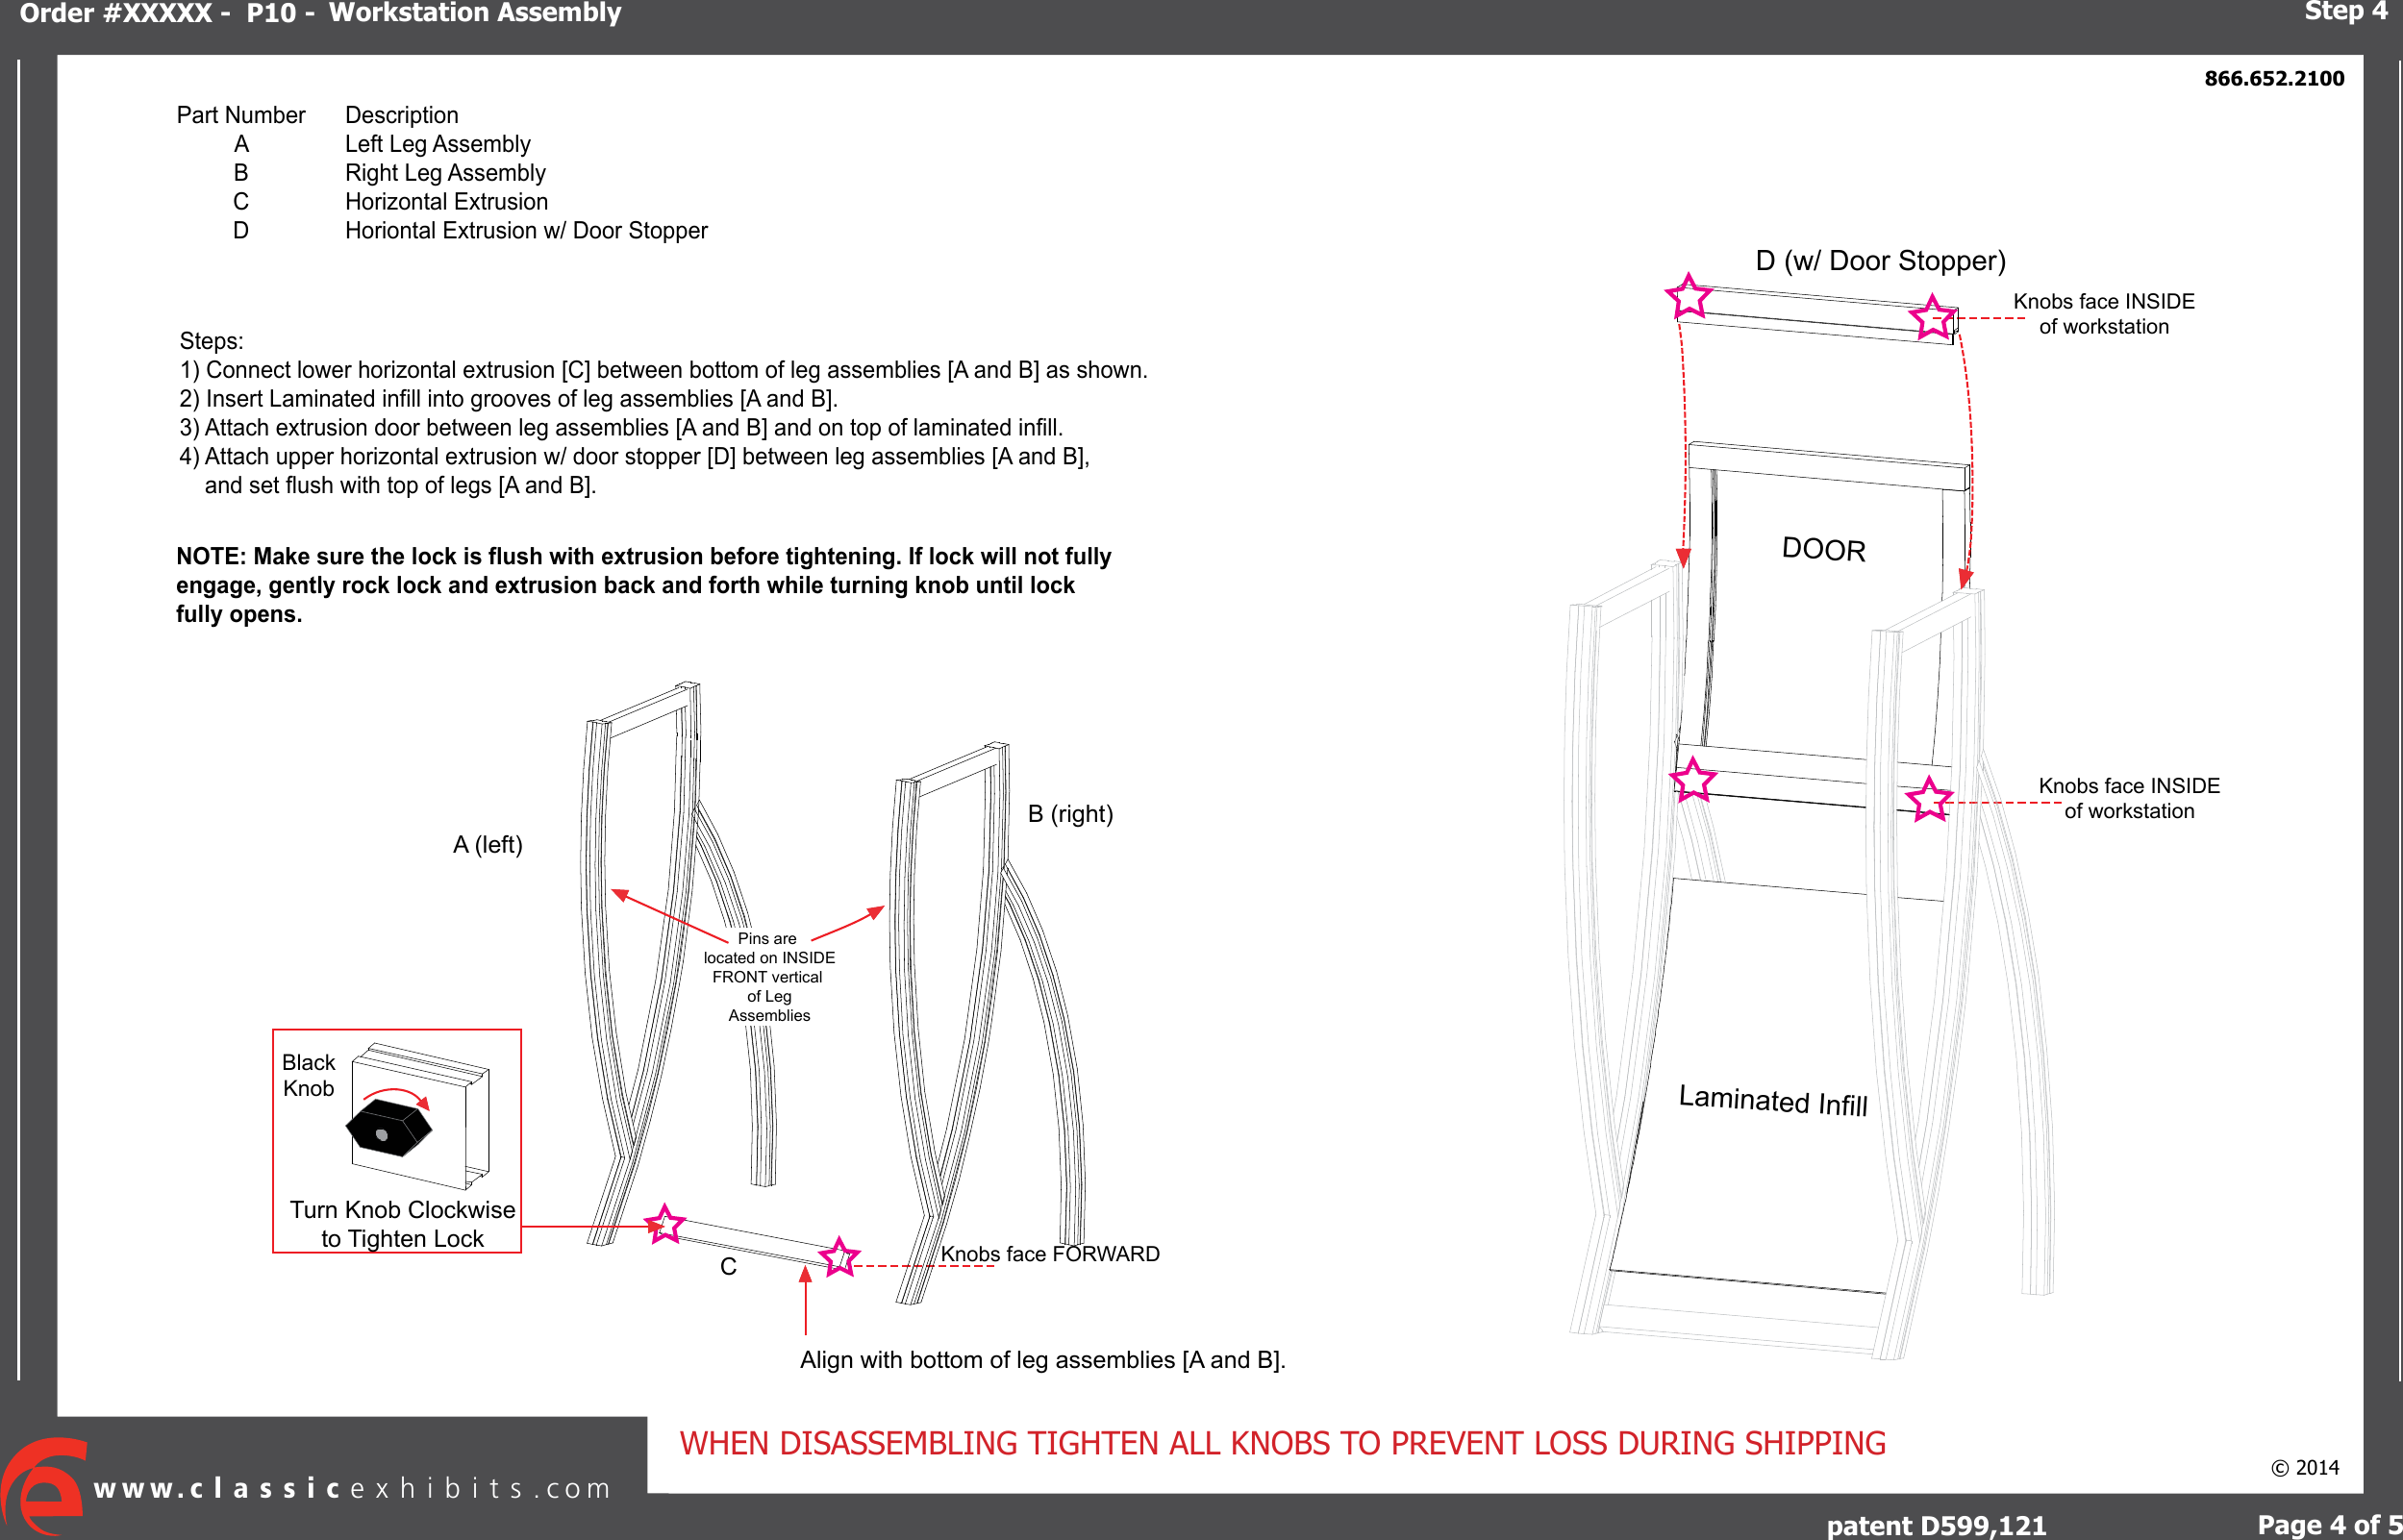 Page 5 of 9 - Perfect-10-fleur-kit-vk-1505-setup-instructions